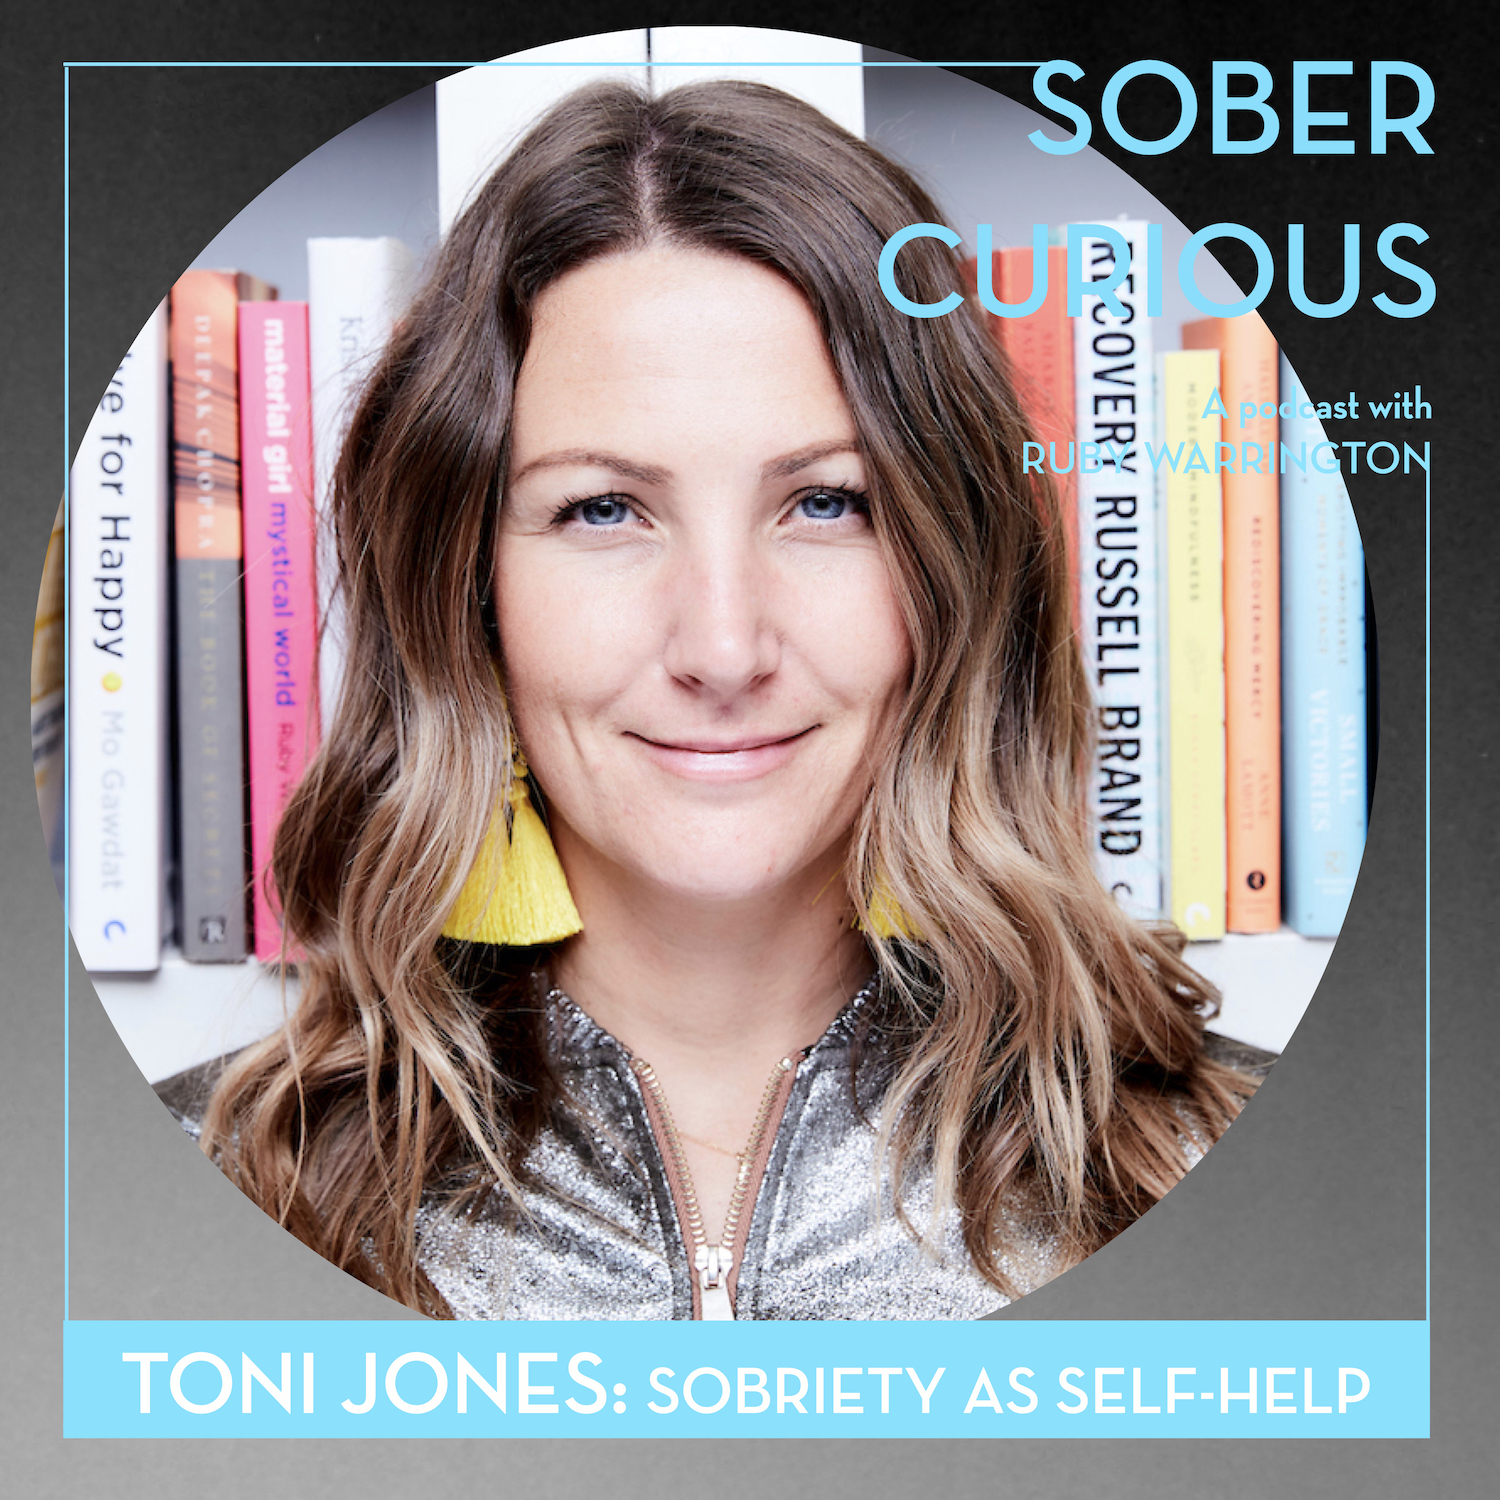 Toni Jones sober curious podcast self-help ruby warrington